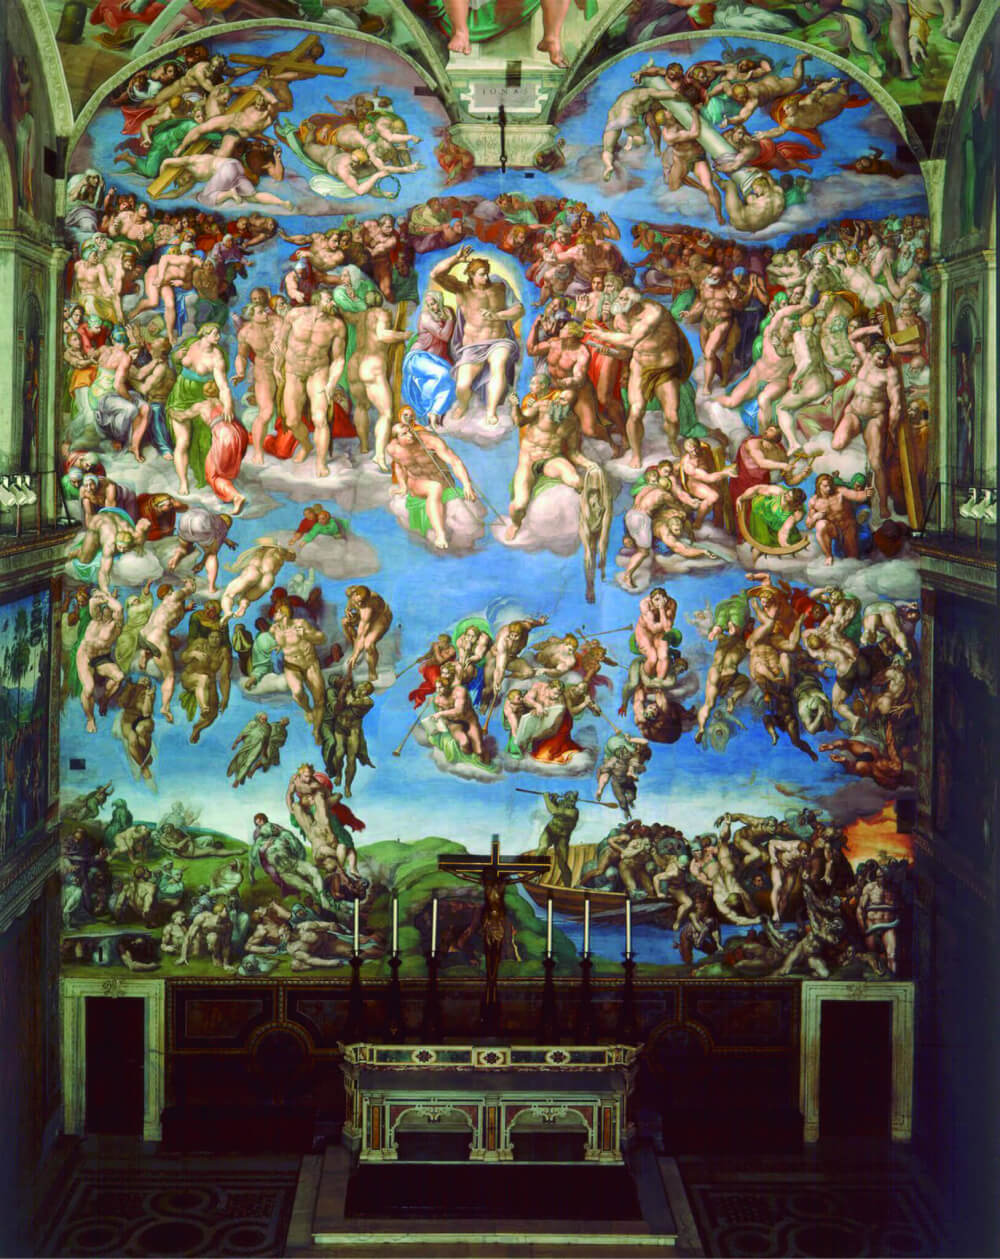 O Juízo Final, afresco de Michelangelo Buonarroti, 1535-1541.